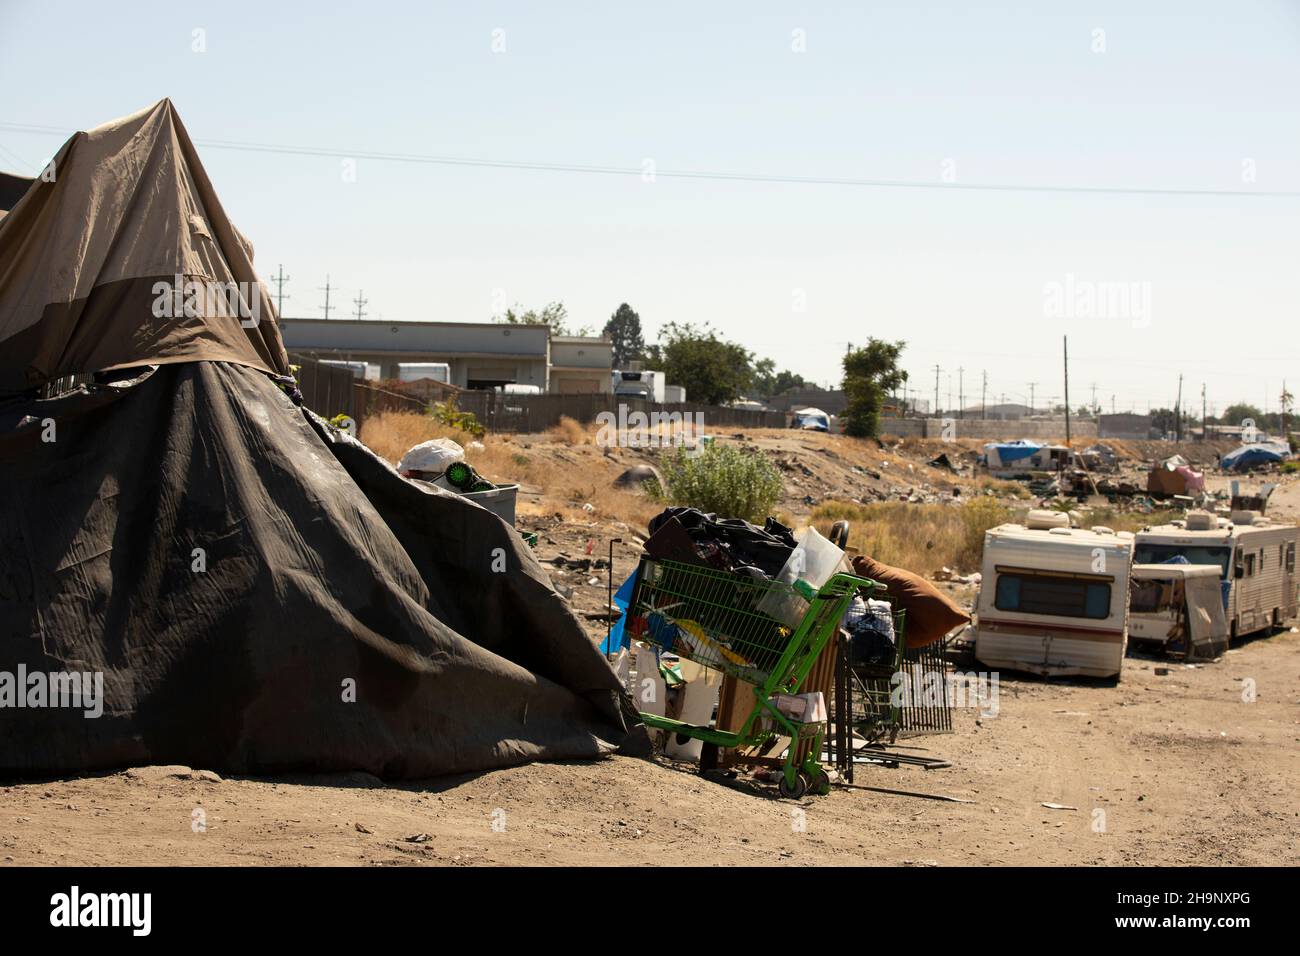 View of a homeless encampment in Stockton, California, USA. Stock Photo